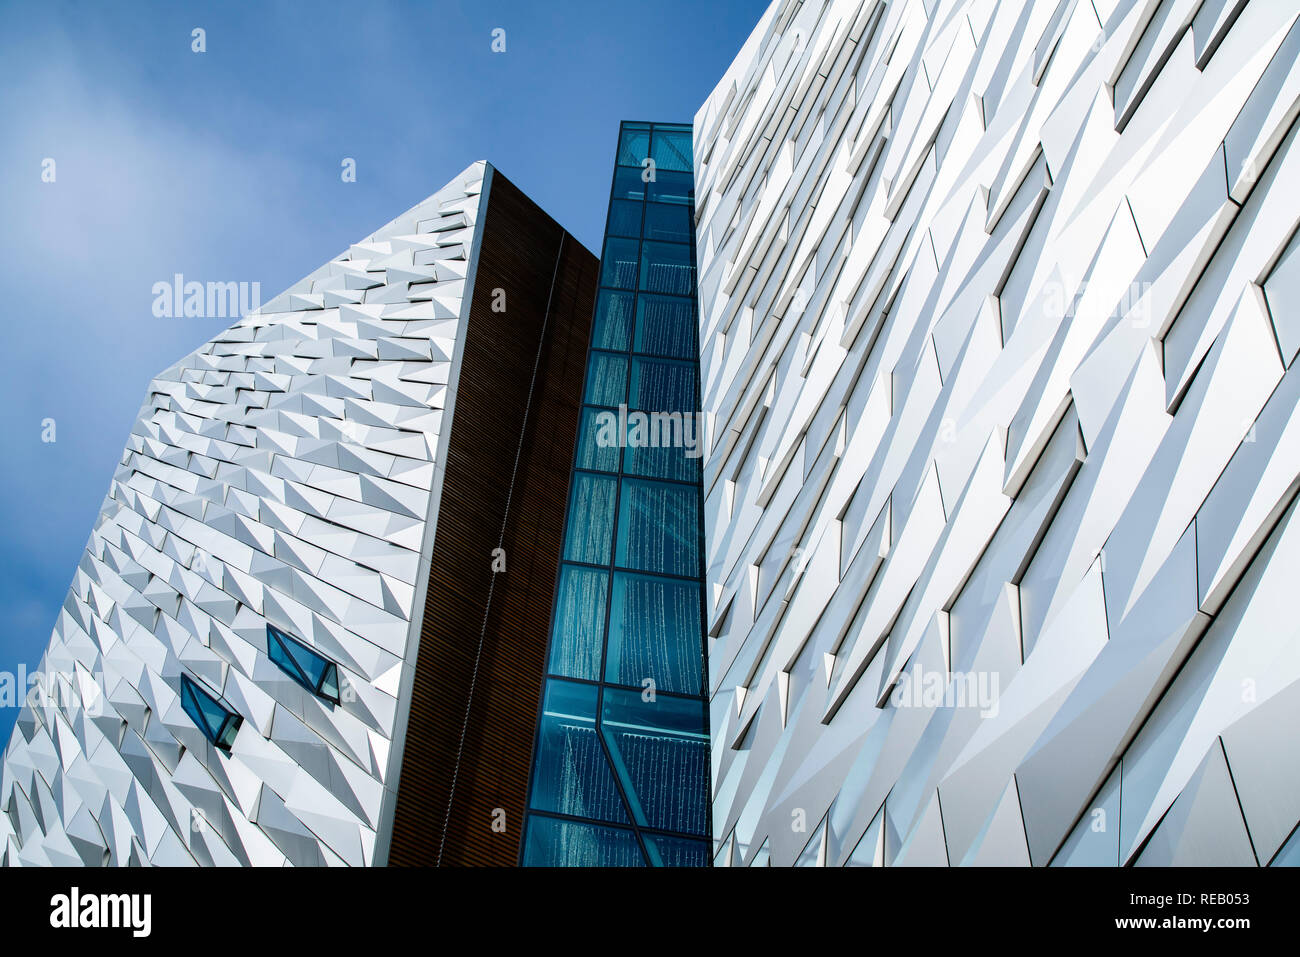 General view of Titanic Belfast in the dockside area of Belfast, UK Stock Photo